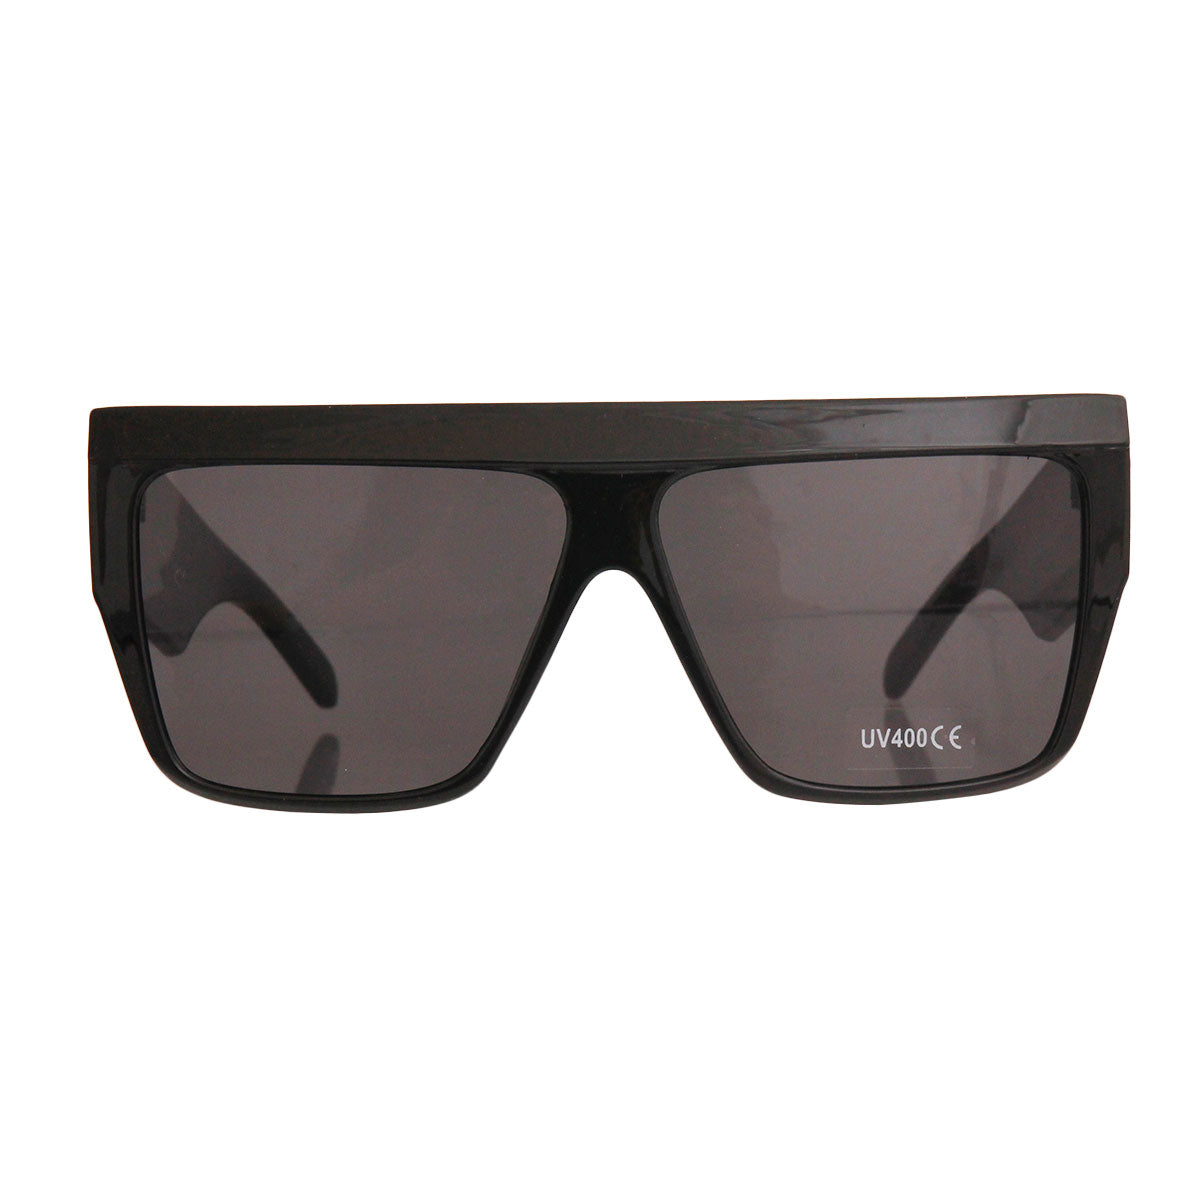 Black Square Celine Inspired Sunglasses